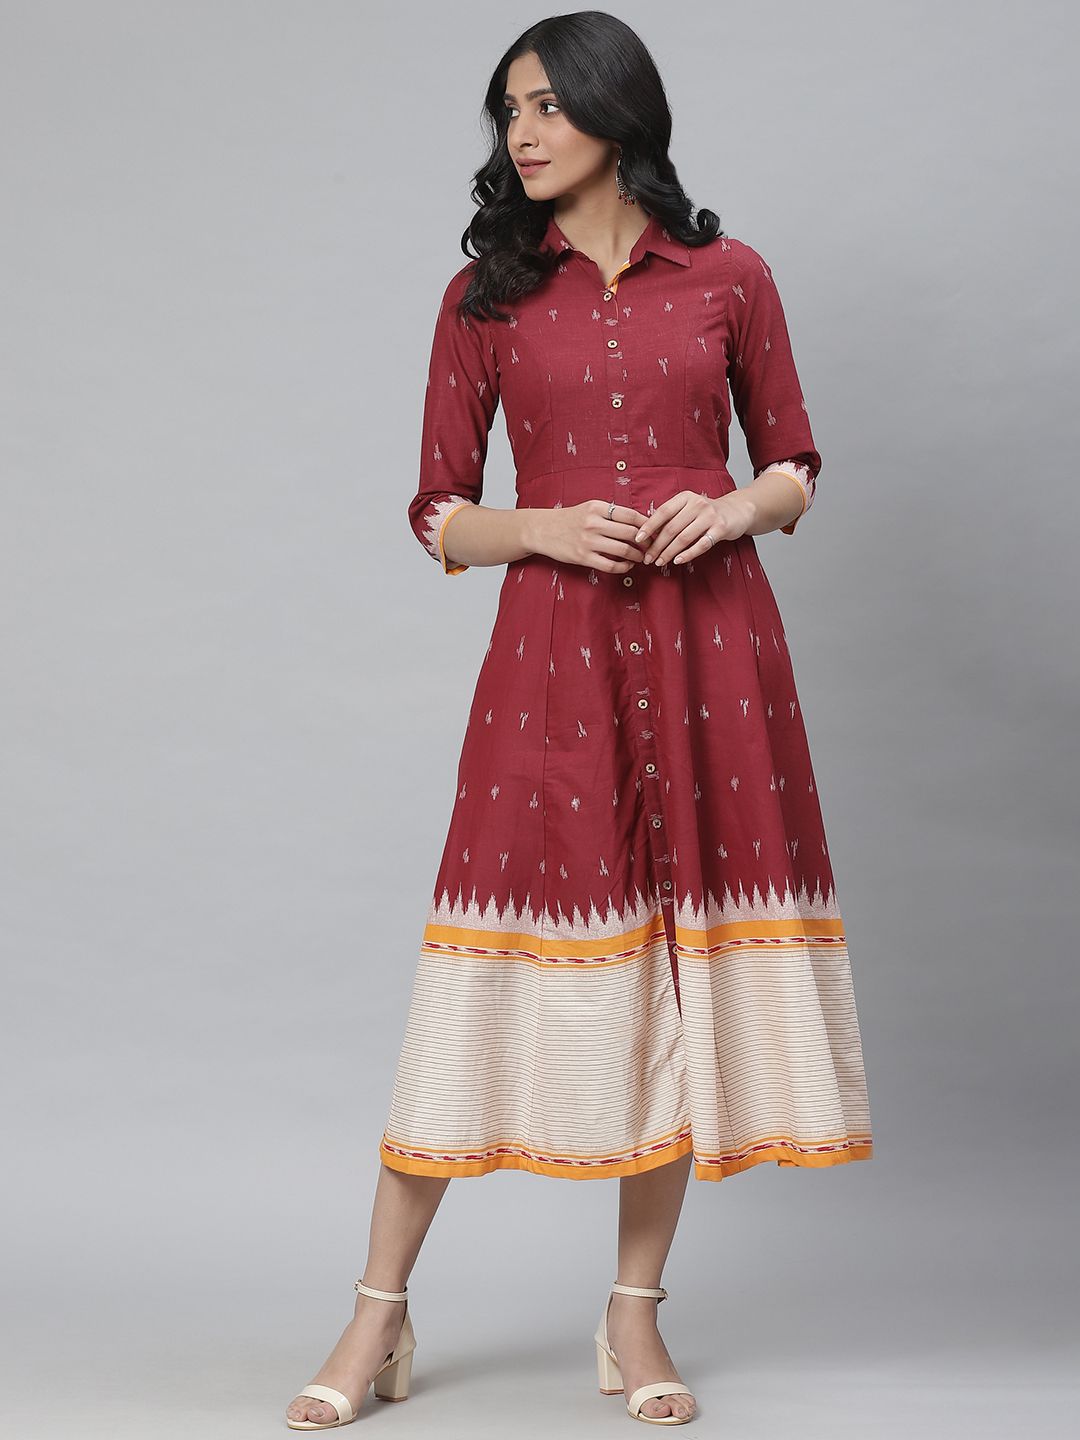 Rangriti Women Maroon & Off-White Self Design A-Line Dress Price in India